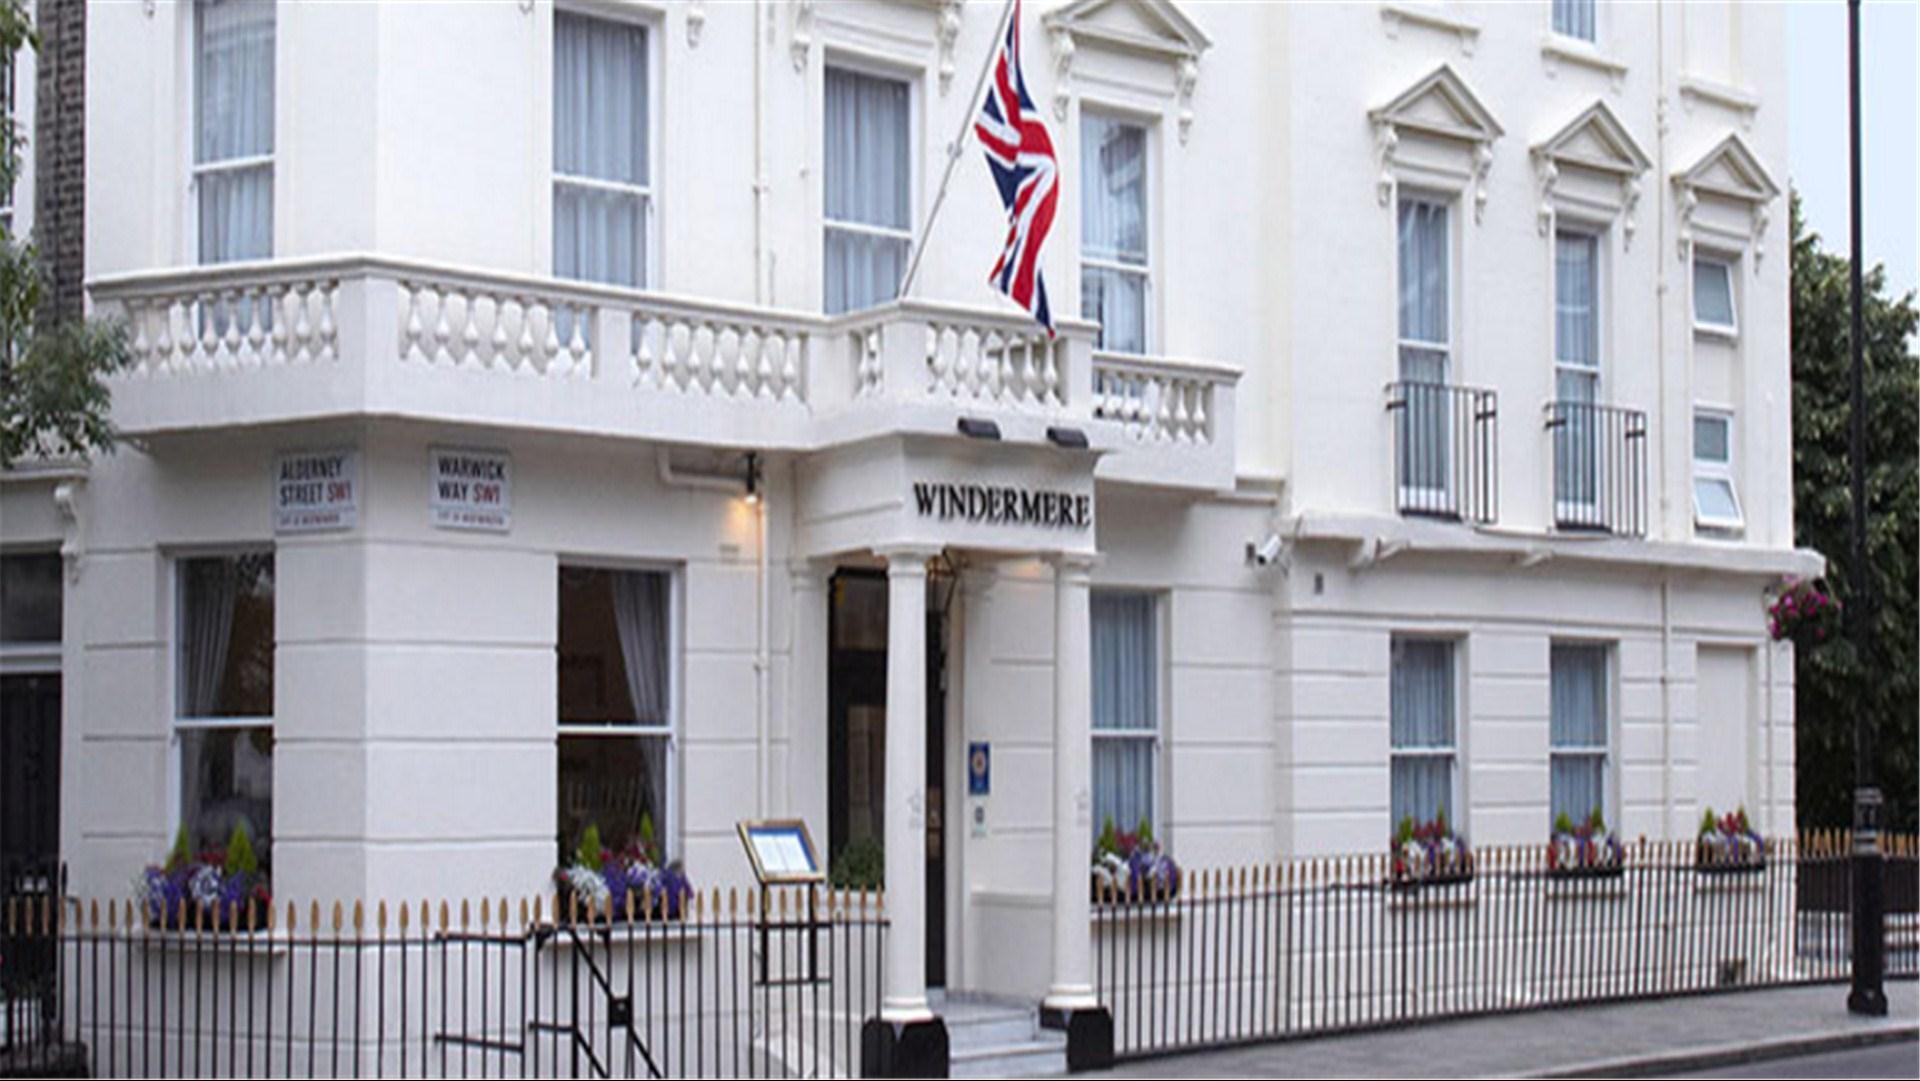 The Windermere Hotel & Brasserie in London, GB1